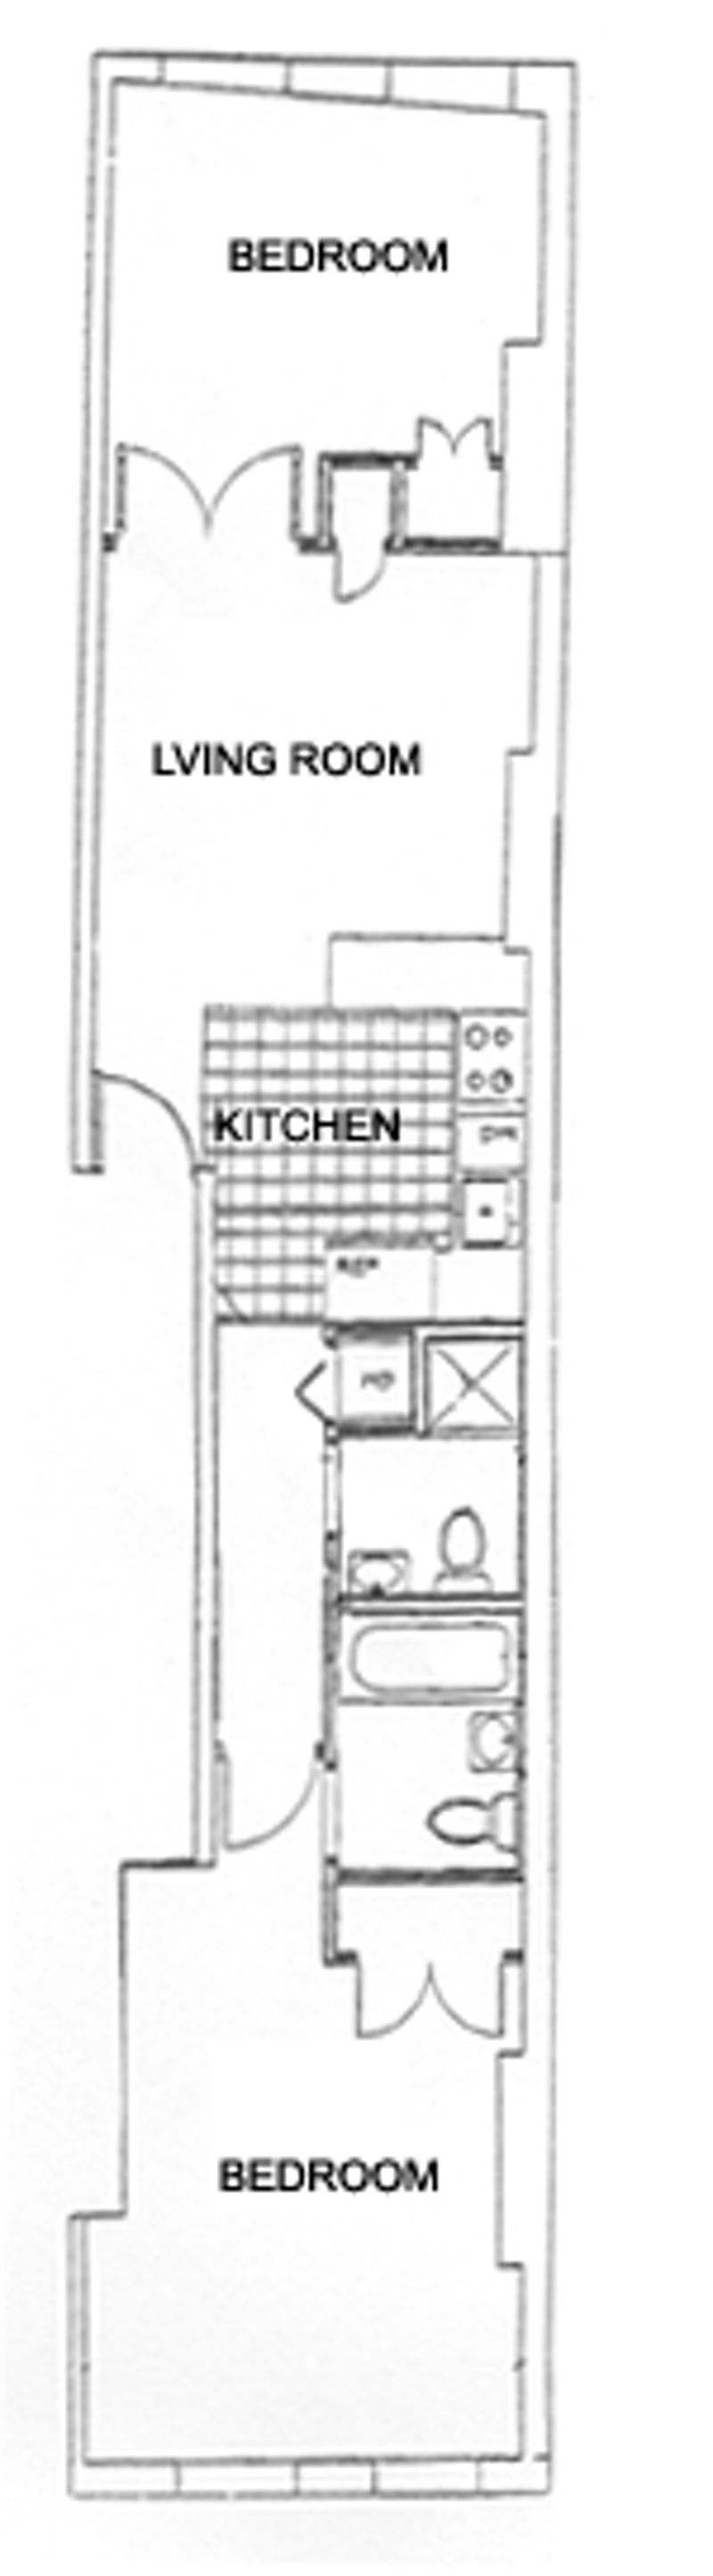 Floorplan for 51 East Houston Street, 2A